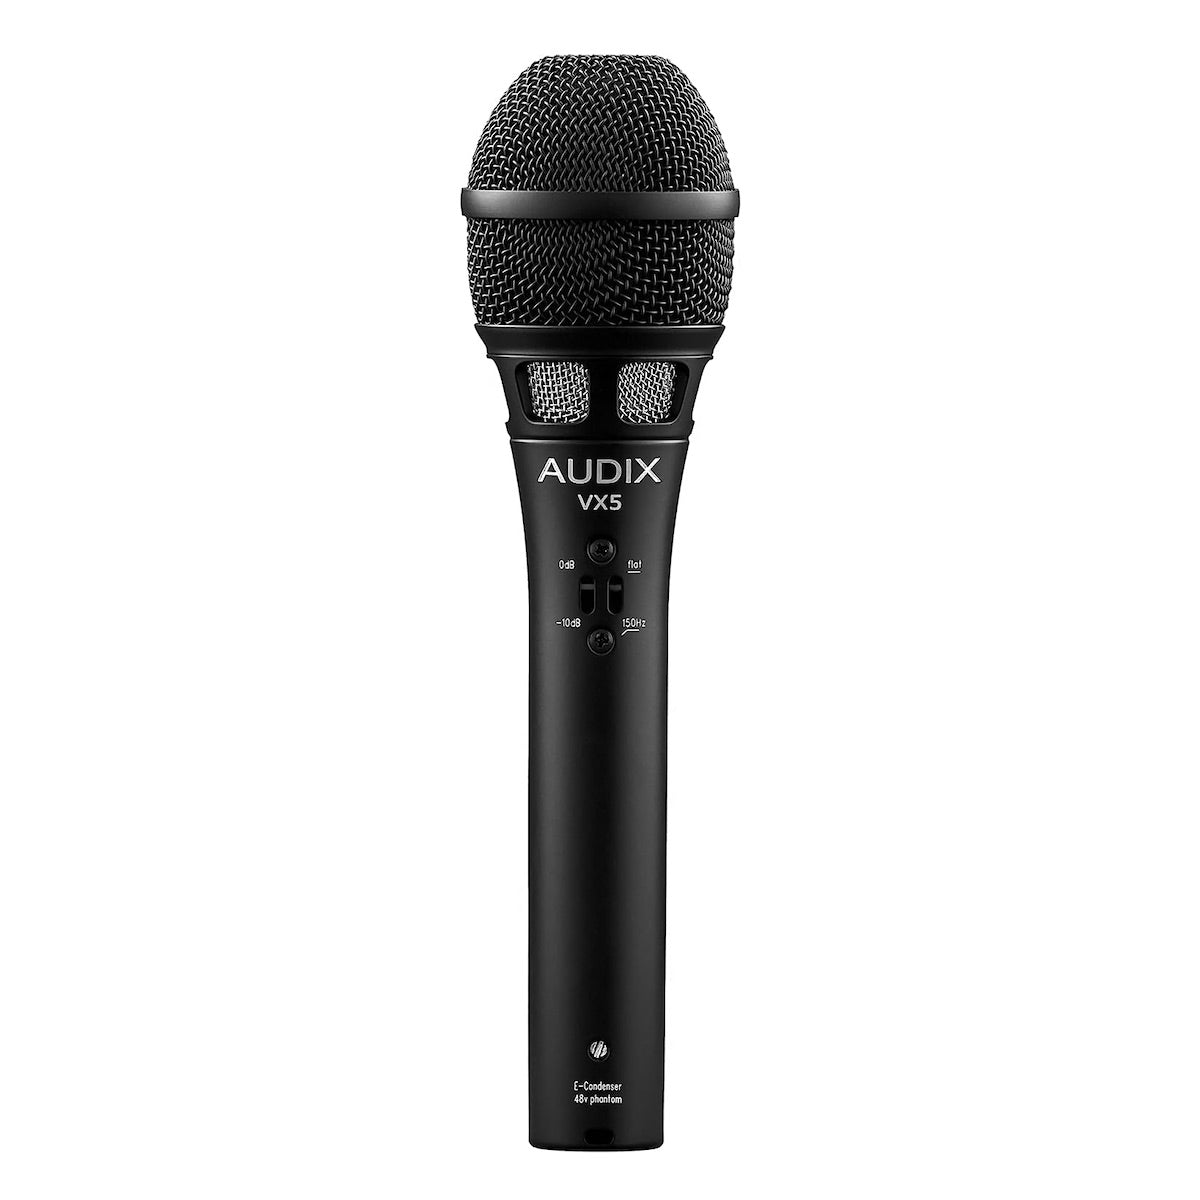 Audix VX5 Premium Electret Condenser Vocal Microphone